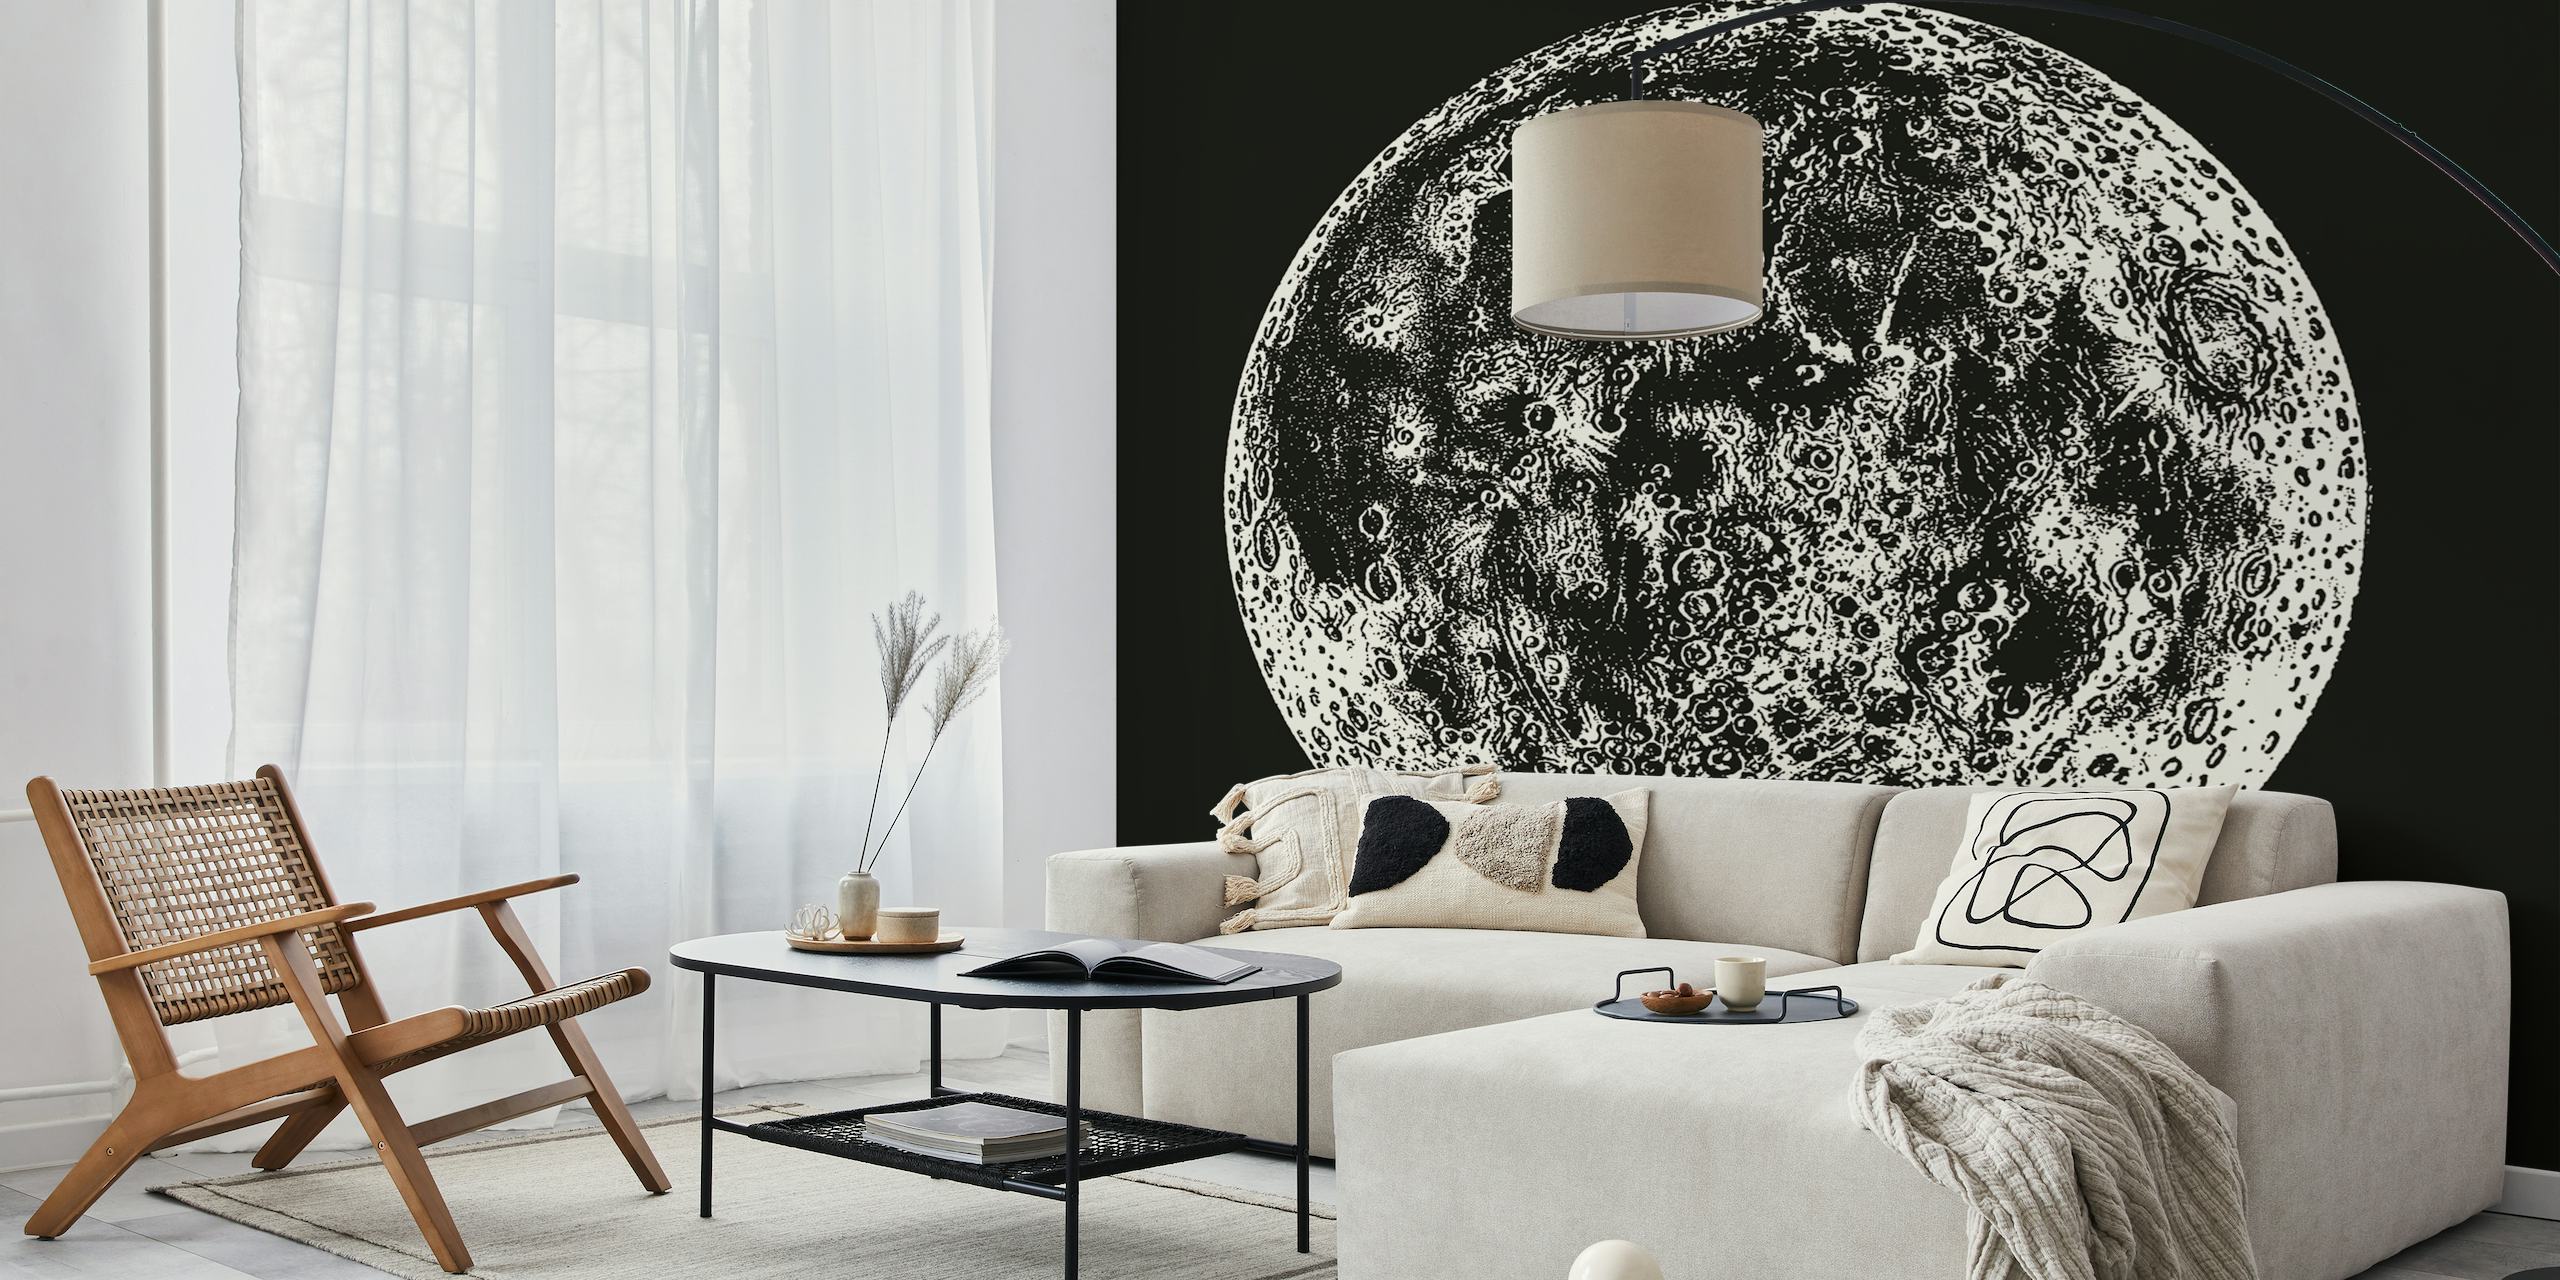 Full Moon - Vintage Astër behang